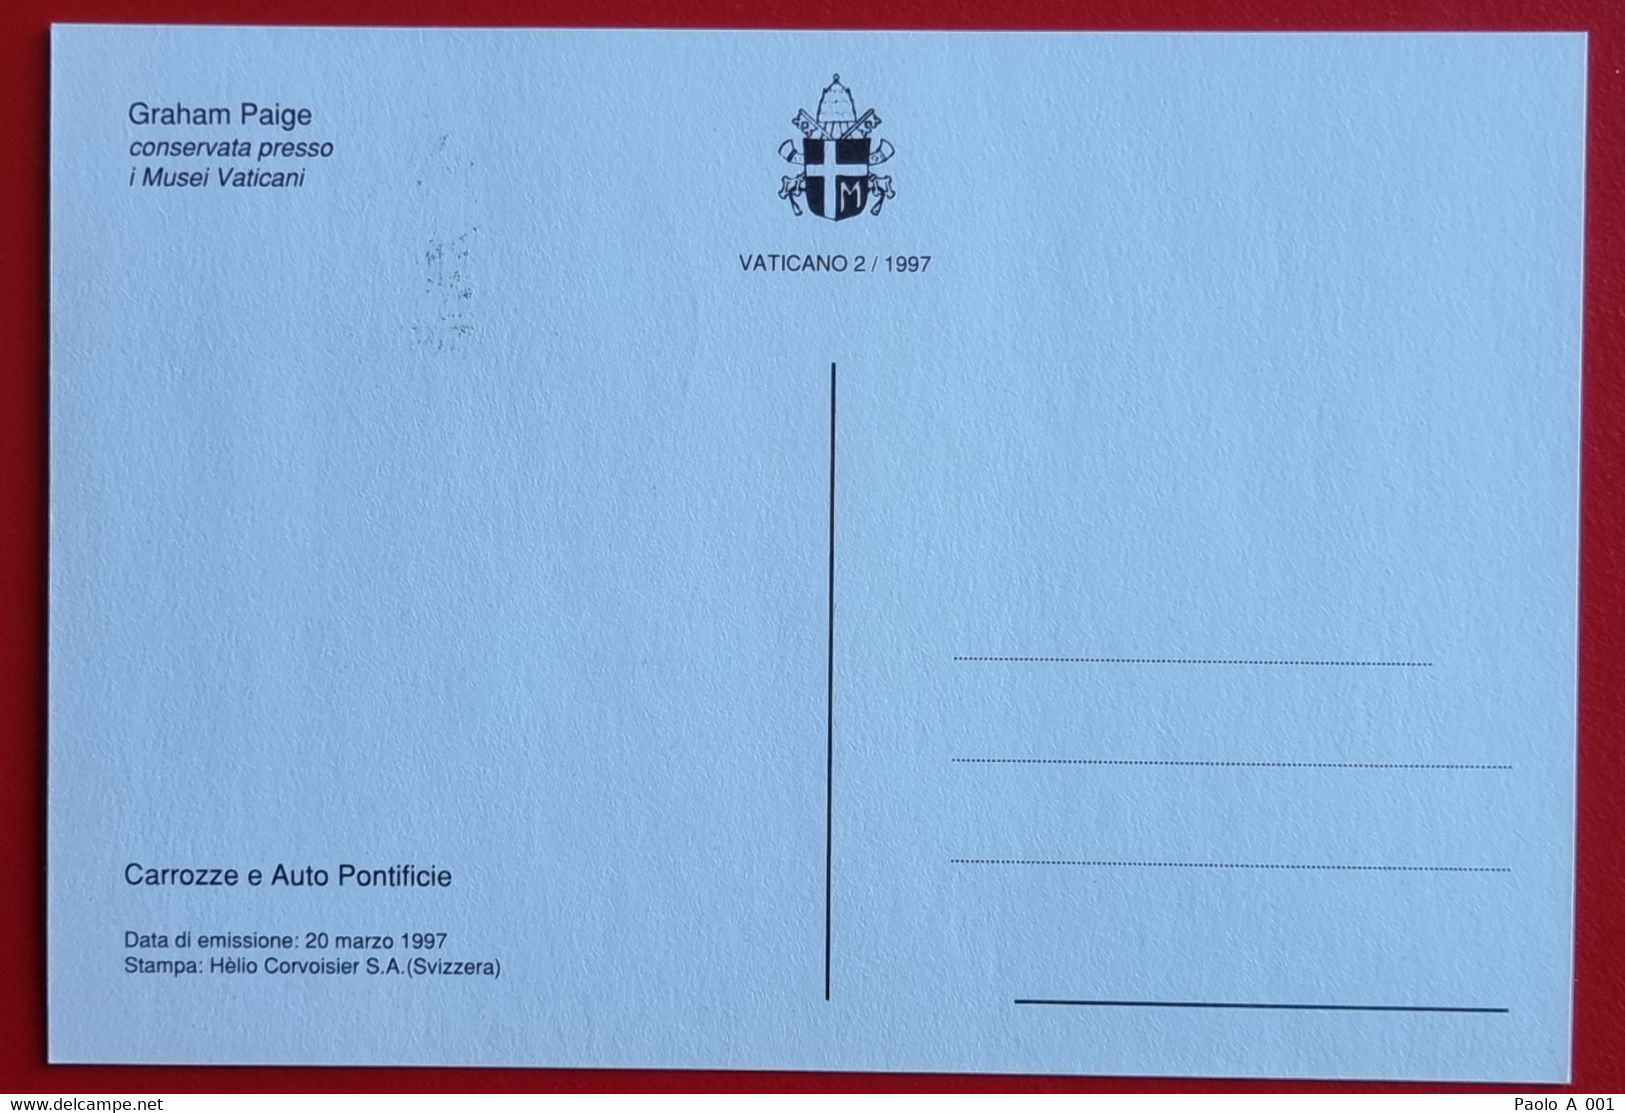 VATICANO VATIKAN VATICAN 1997 CAROZZE AUTO PONTIFICE POPE COACH CARS LIMOUSINE MAXIMUM-CARD GRAHAM PAIGE - Storia Postale